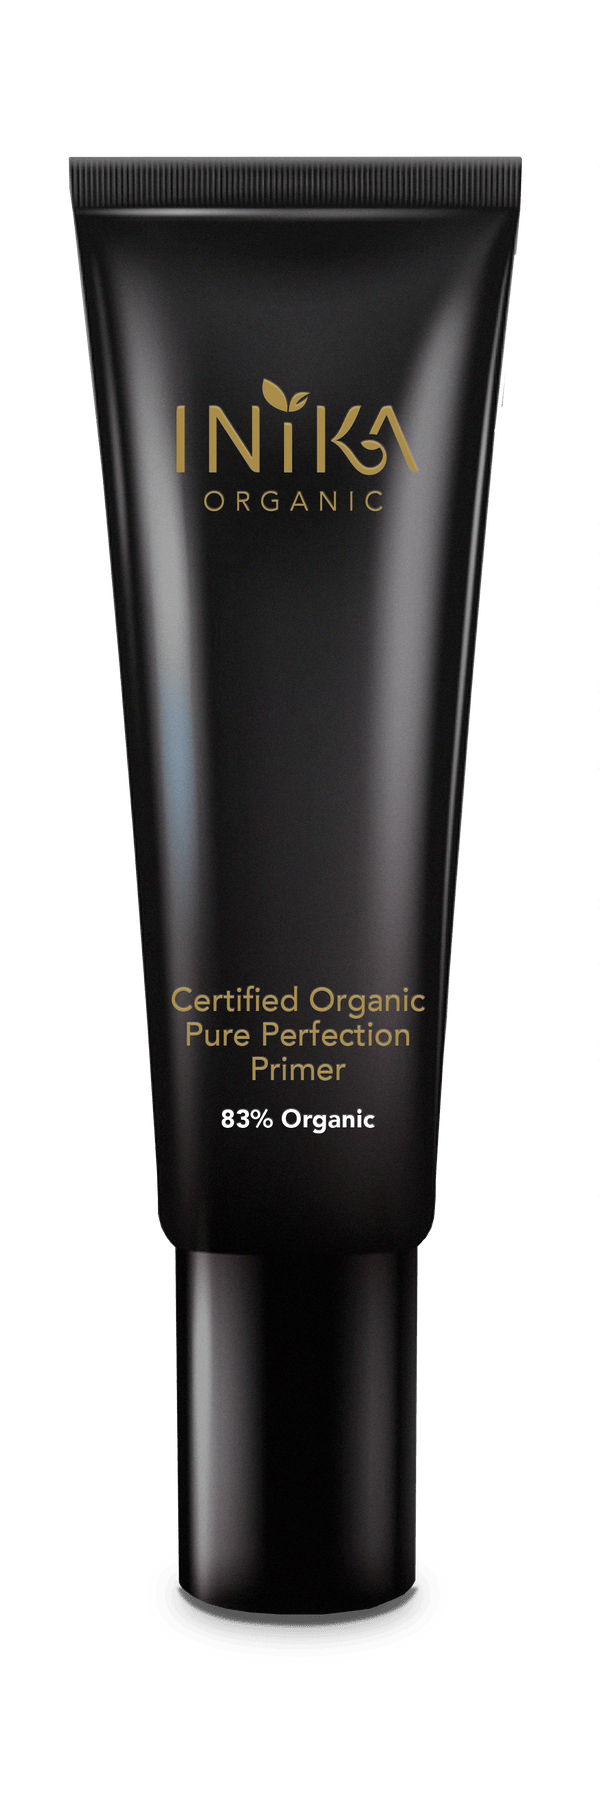 Inika Certified Organic Pure Perfection Primer Natural Makeup Total Beauty Network 